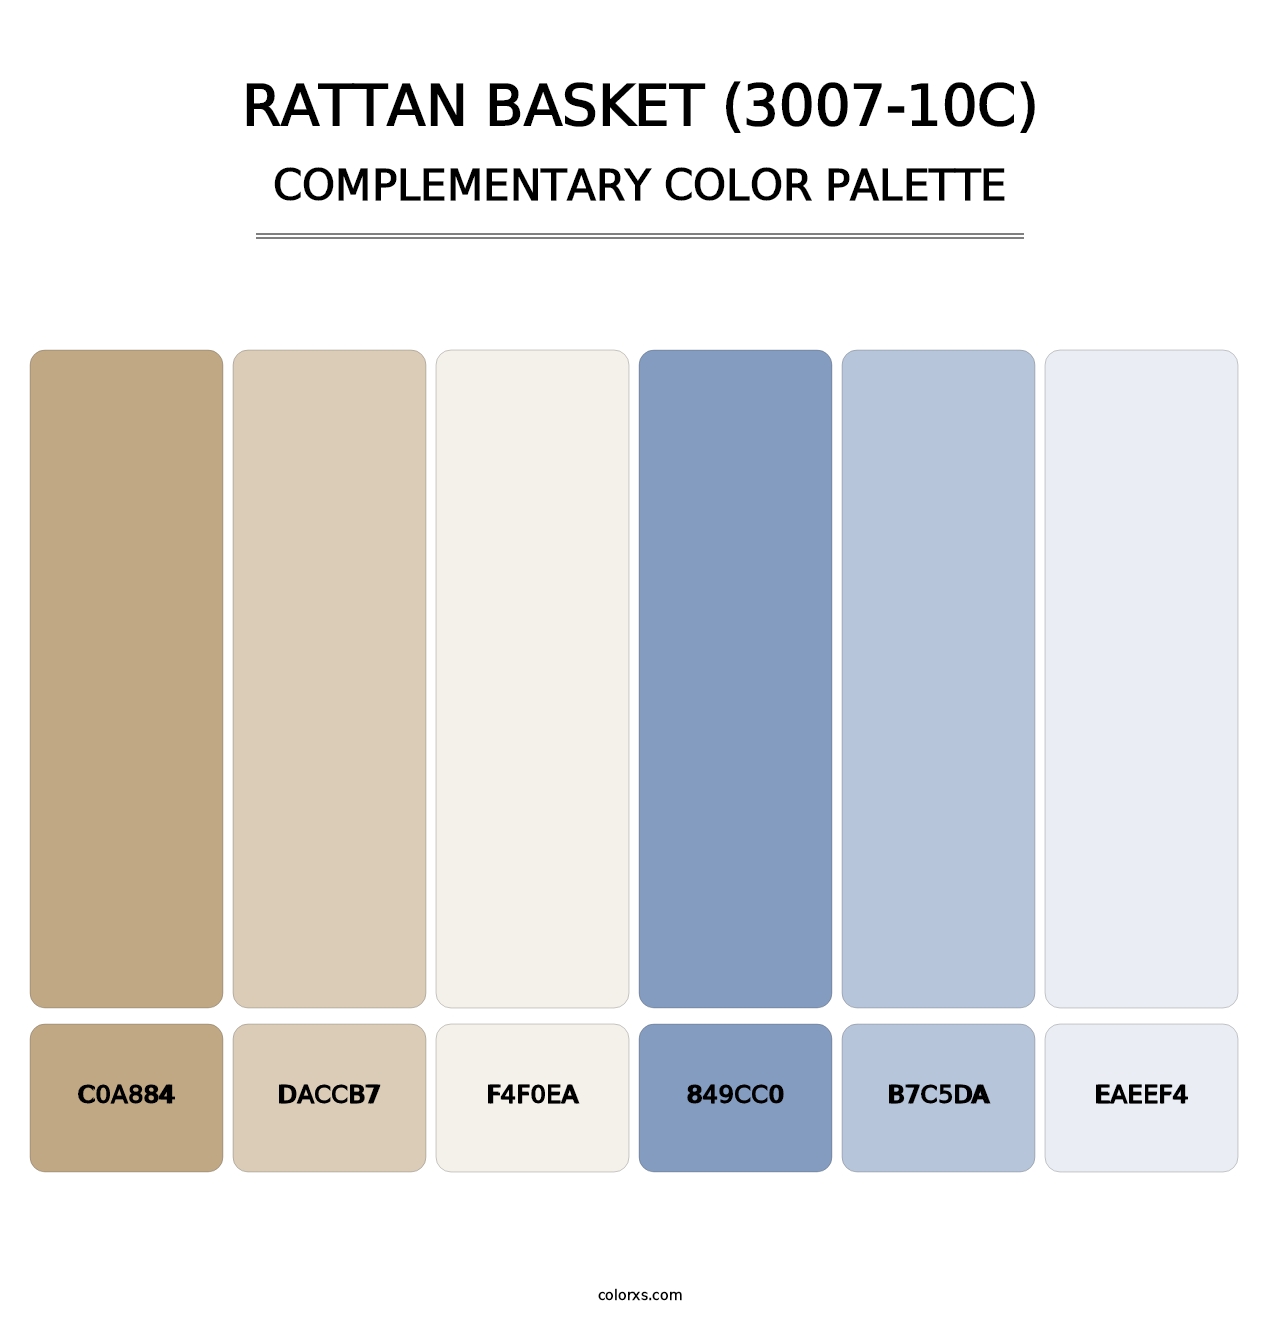 Rattan Basket (3007-10C) - Complementary Color Palette